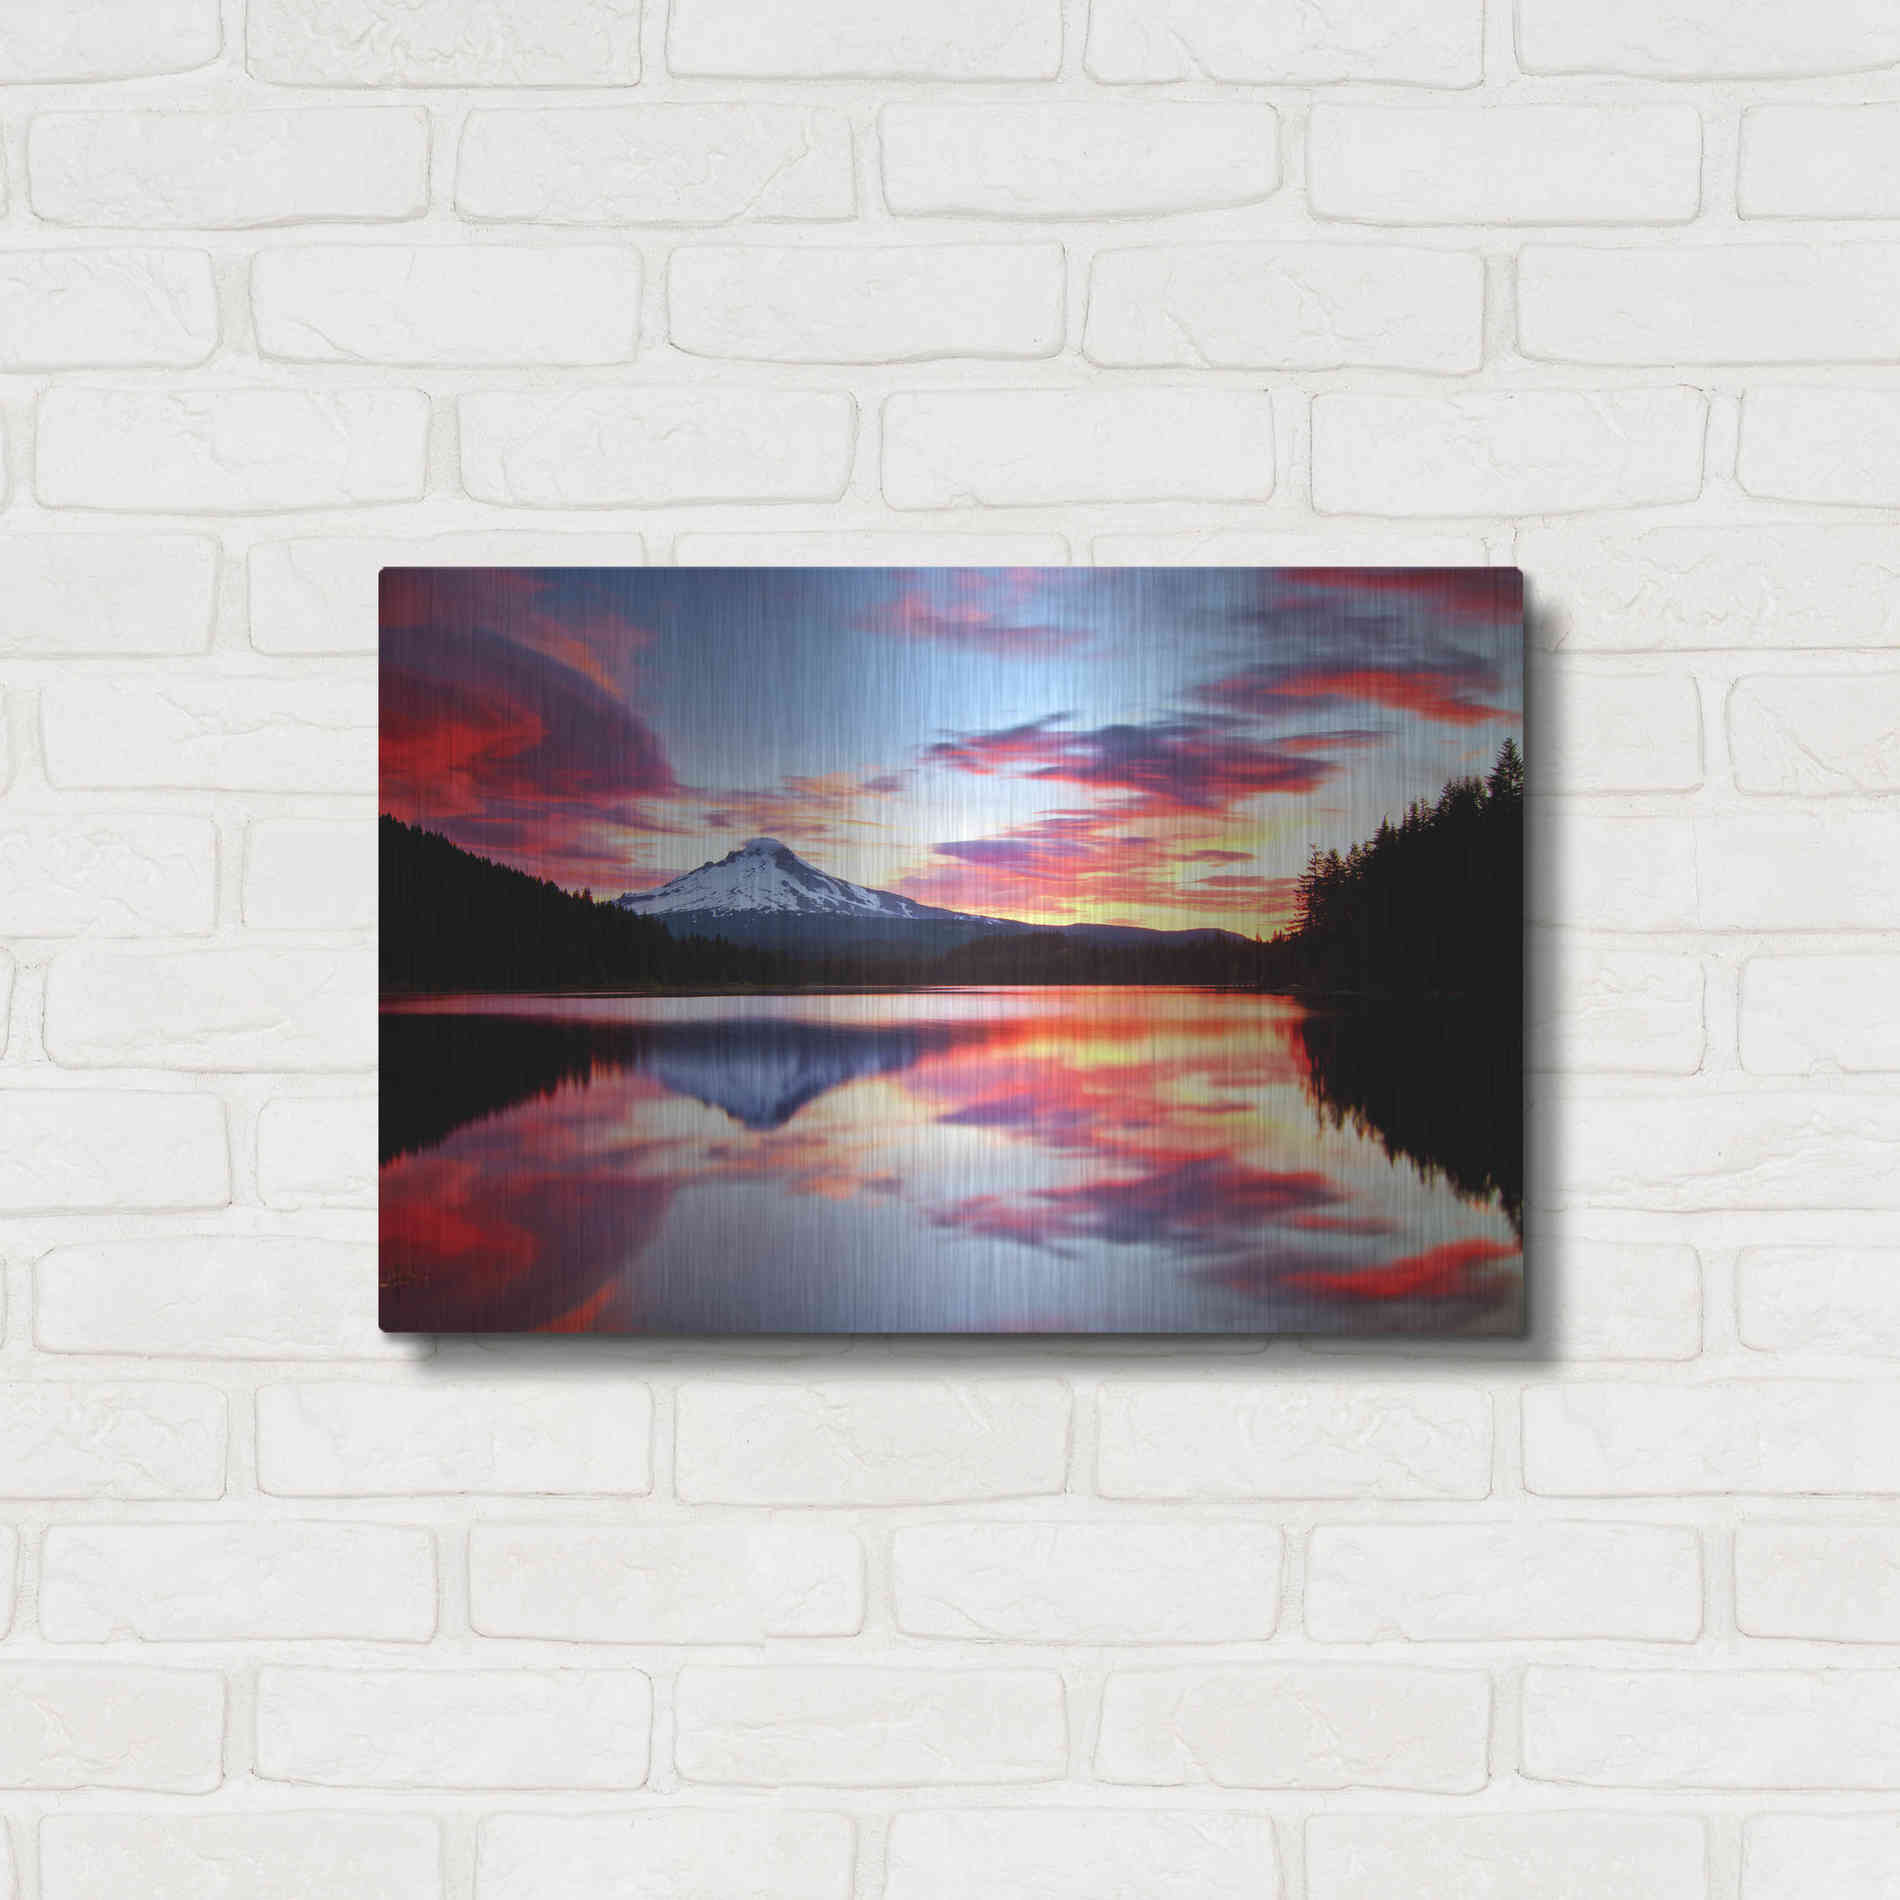 Luxe Metal Art 'Sunrise on the Lake' by Darren White, Metal Wall Art,24x16